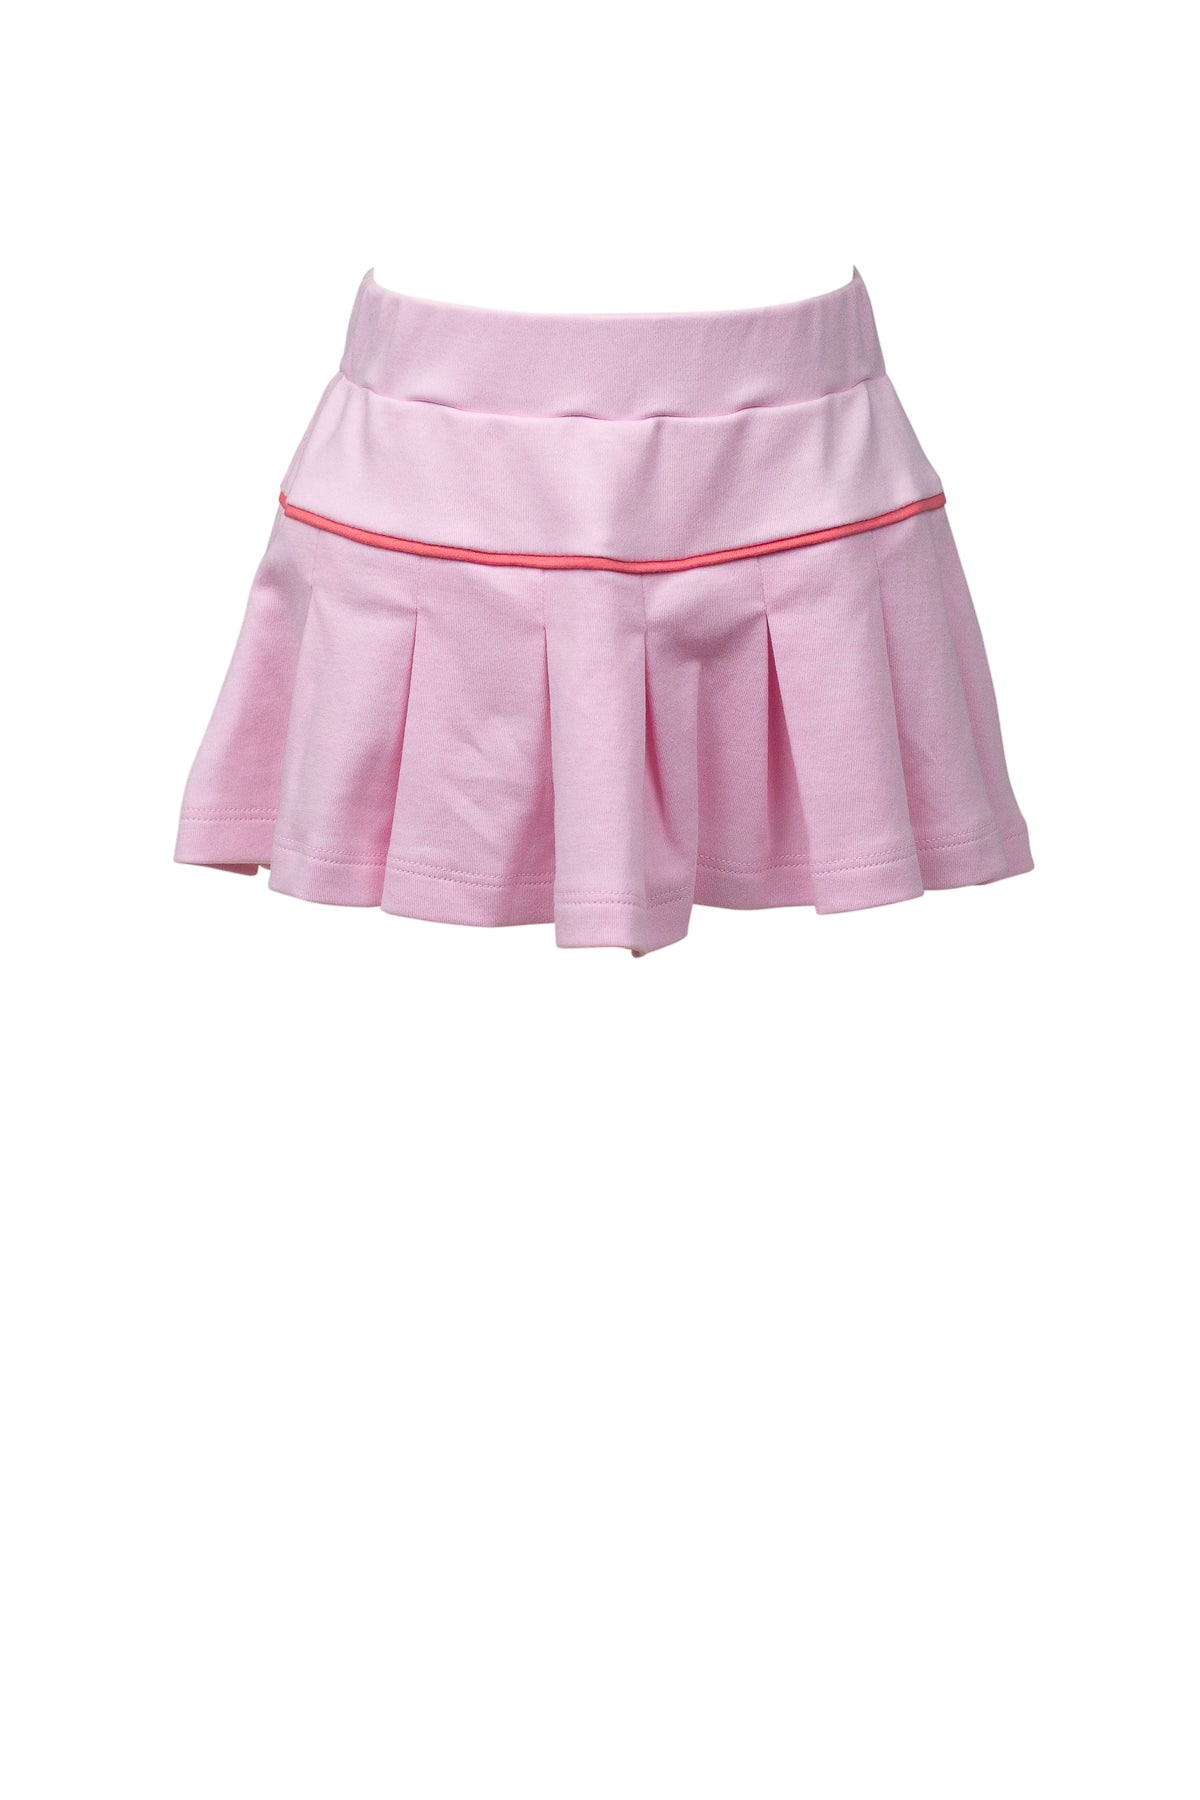 Pink Tennis Skirt with Flamingo Pink Trim